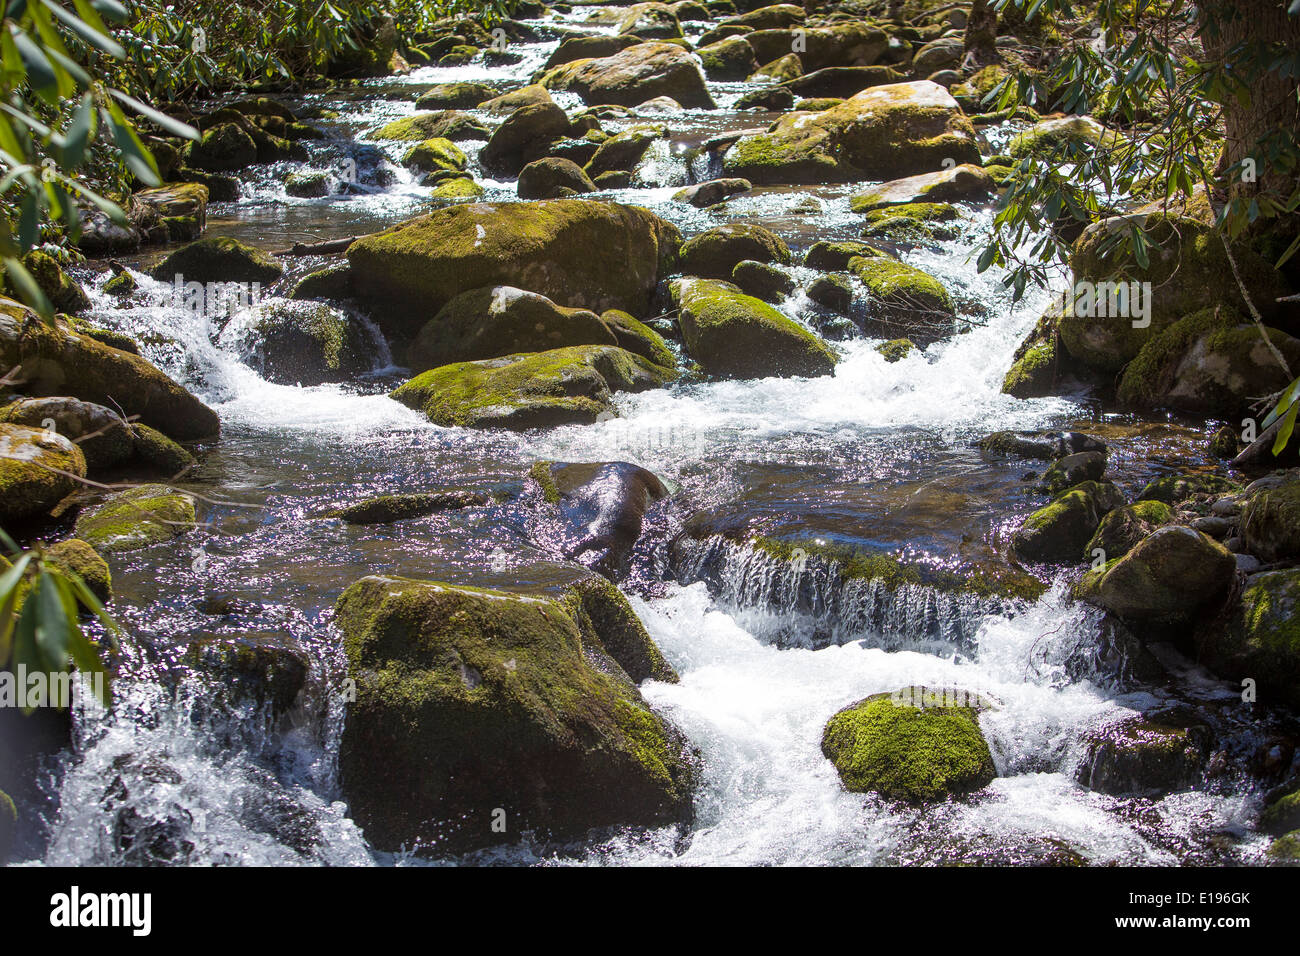 Jakes Bach Fluss ist im Nationalpark Great Smoky Mountains in Tennessee abgebildet. Stockfoto